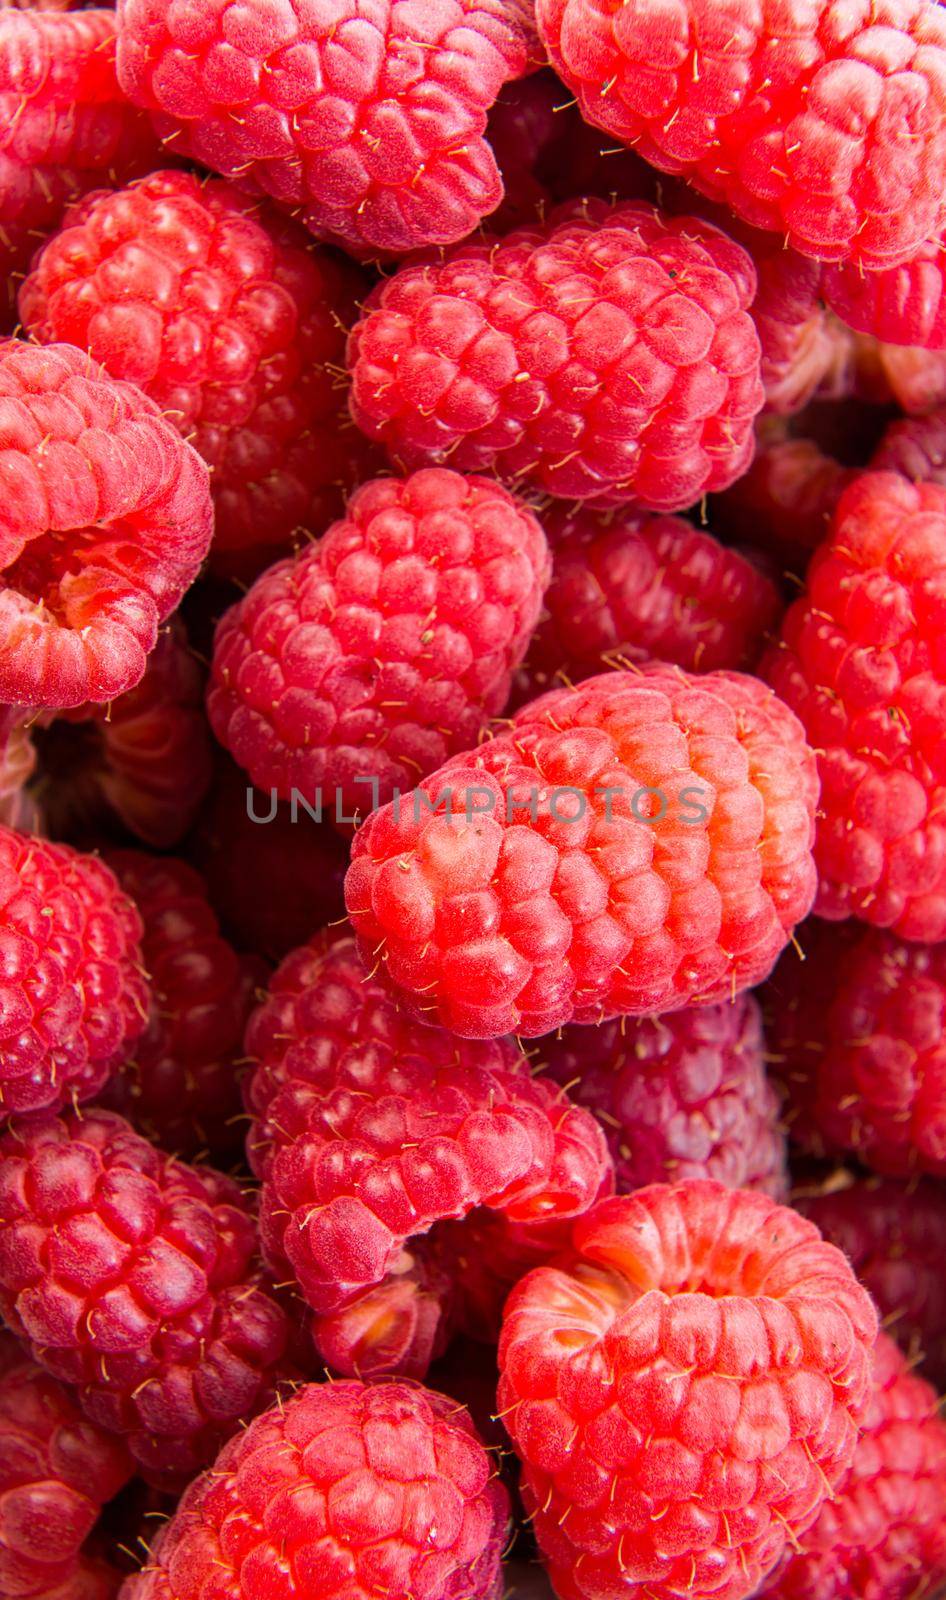 raspberries background by tan4ikk1